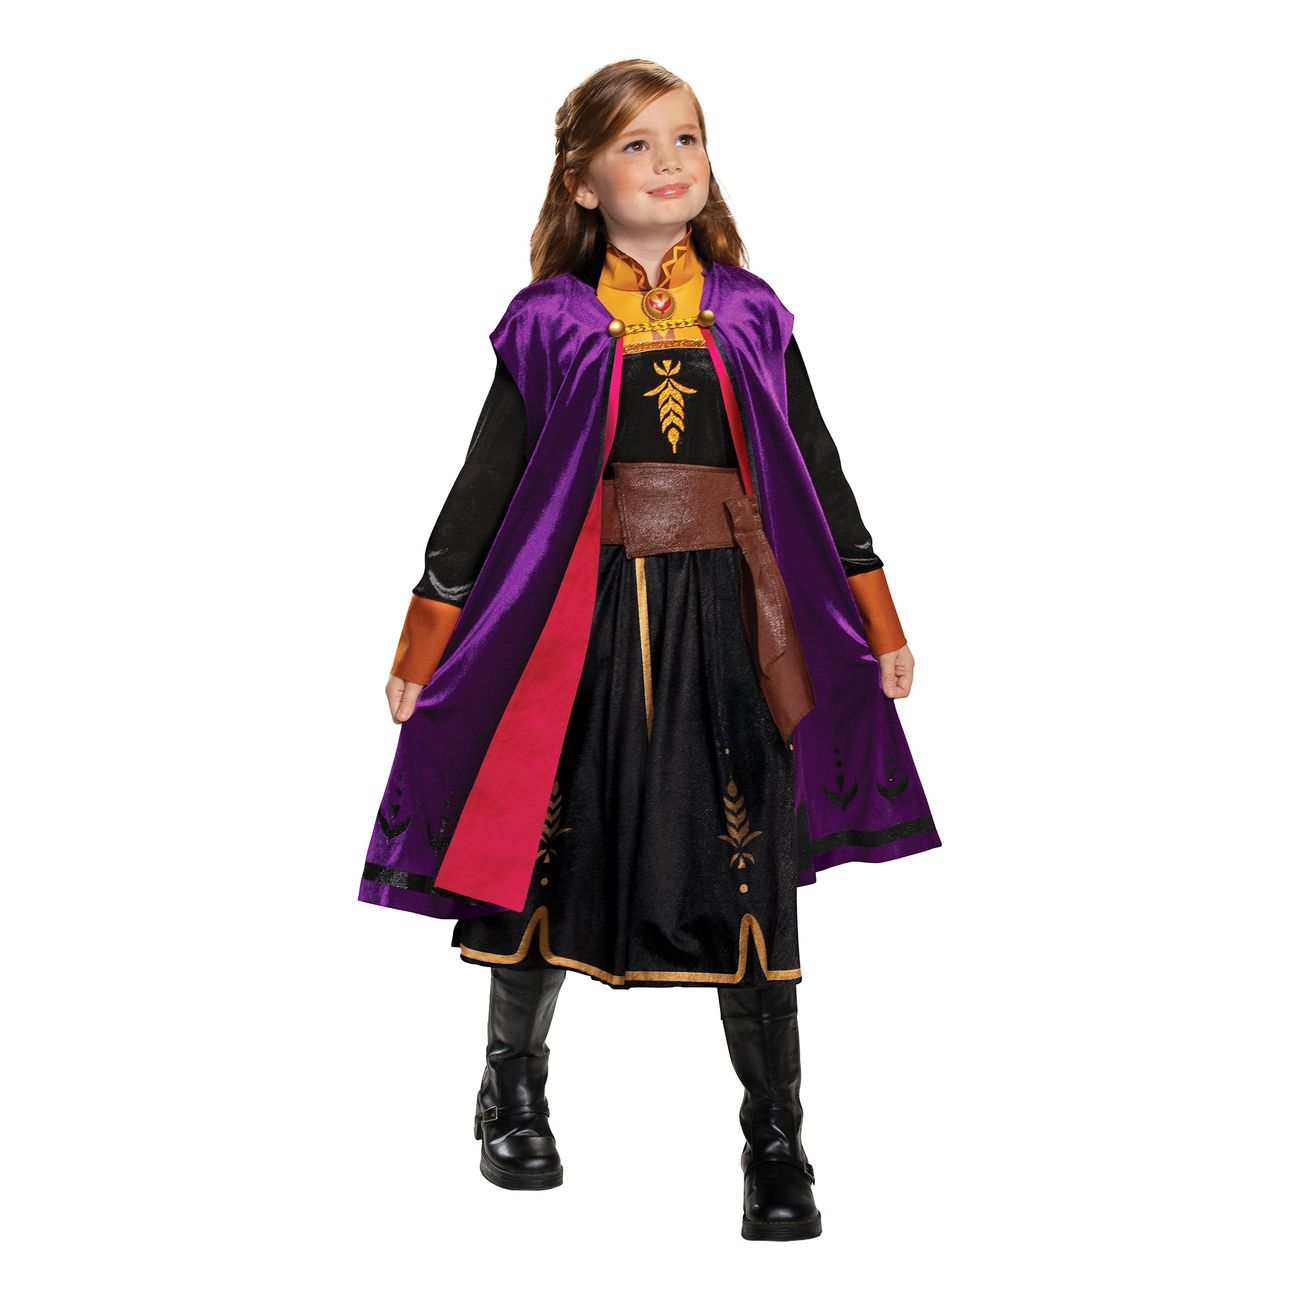 Frozen Anna Travel Børnekostume Deluxe - Disney prinsesse kostume til børn